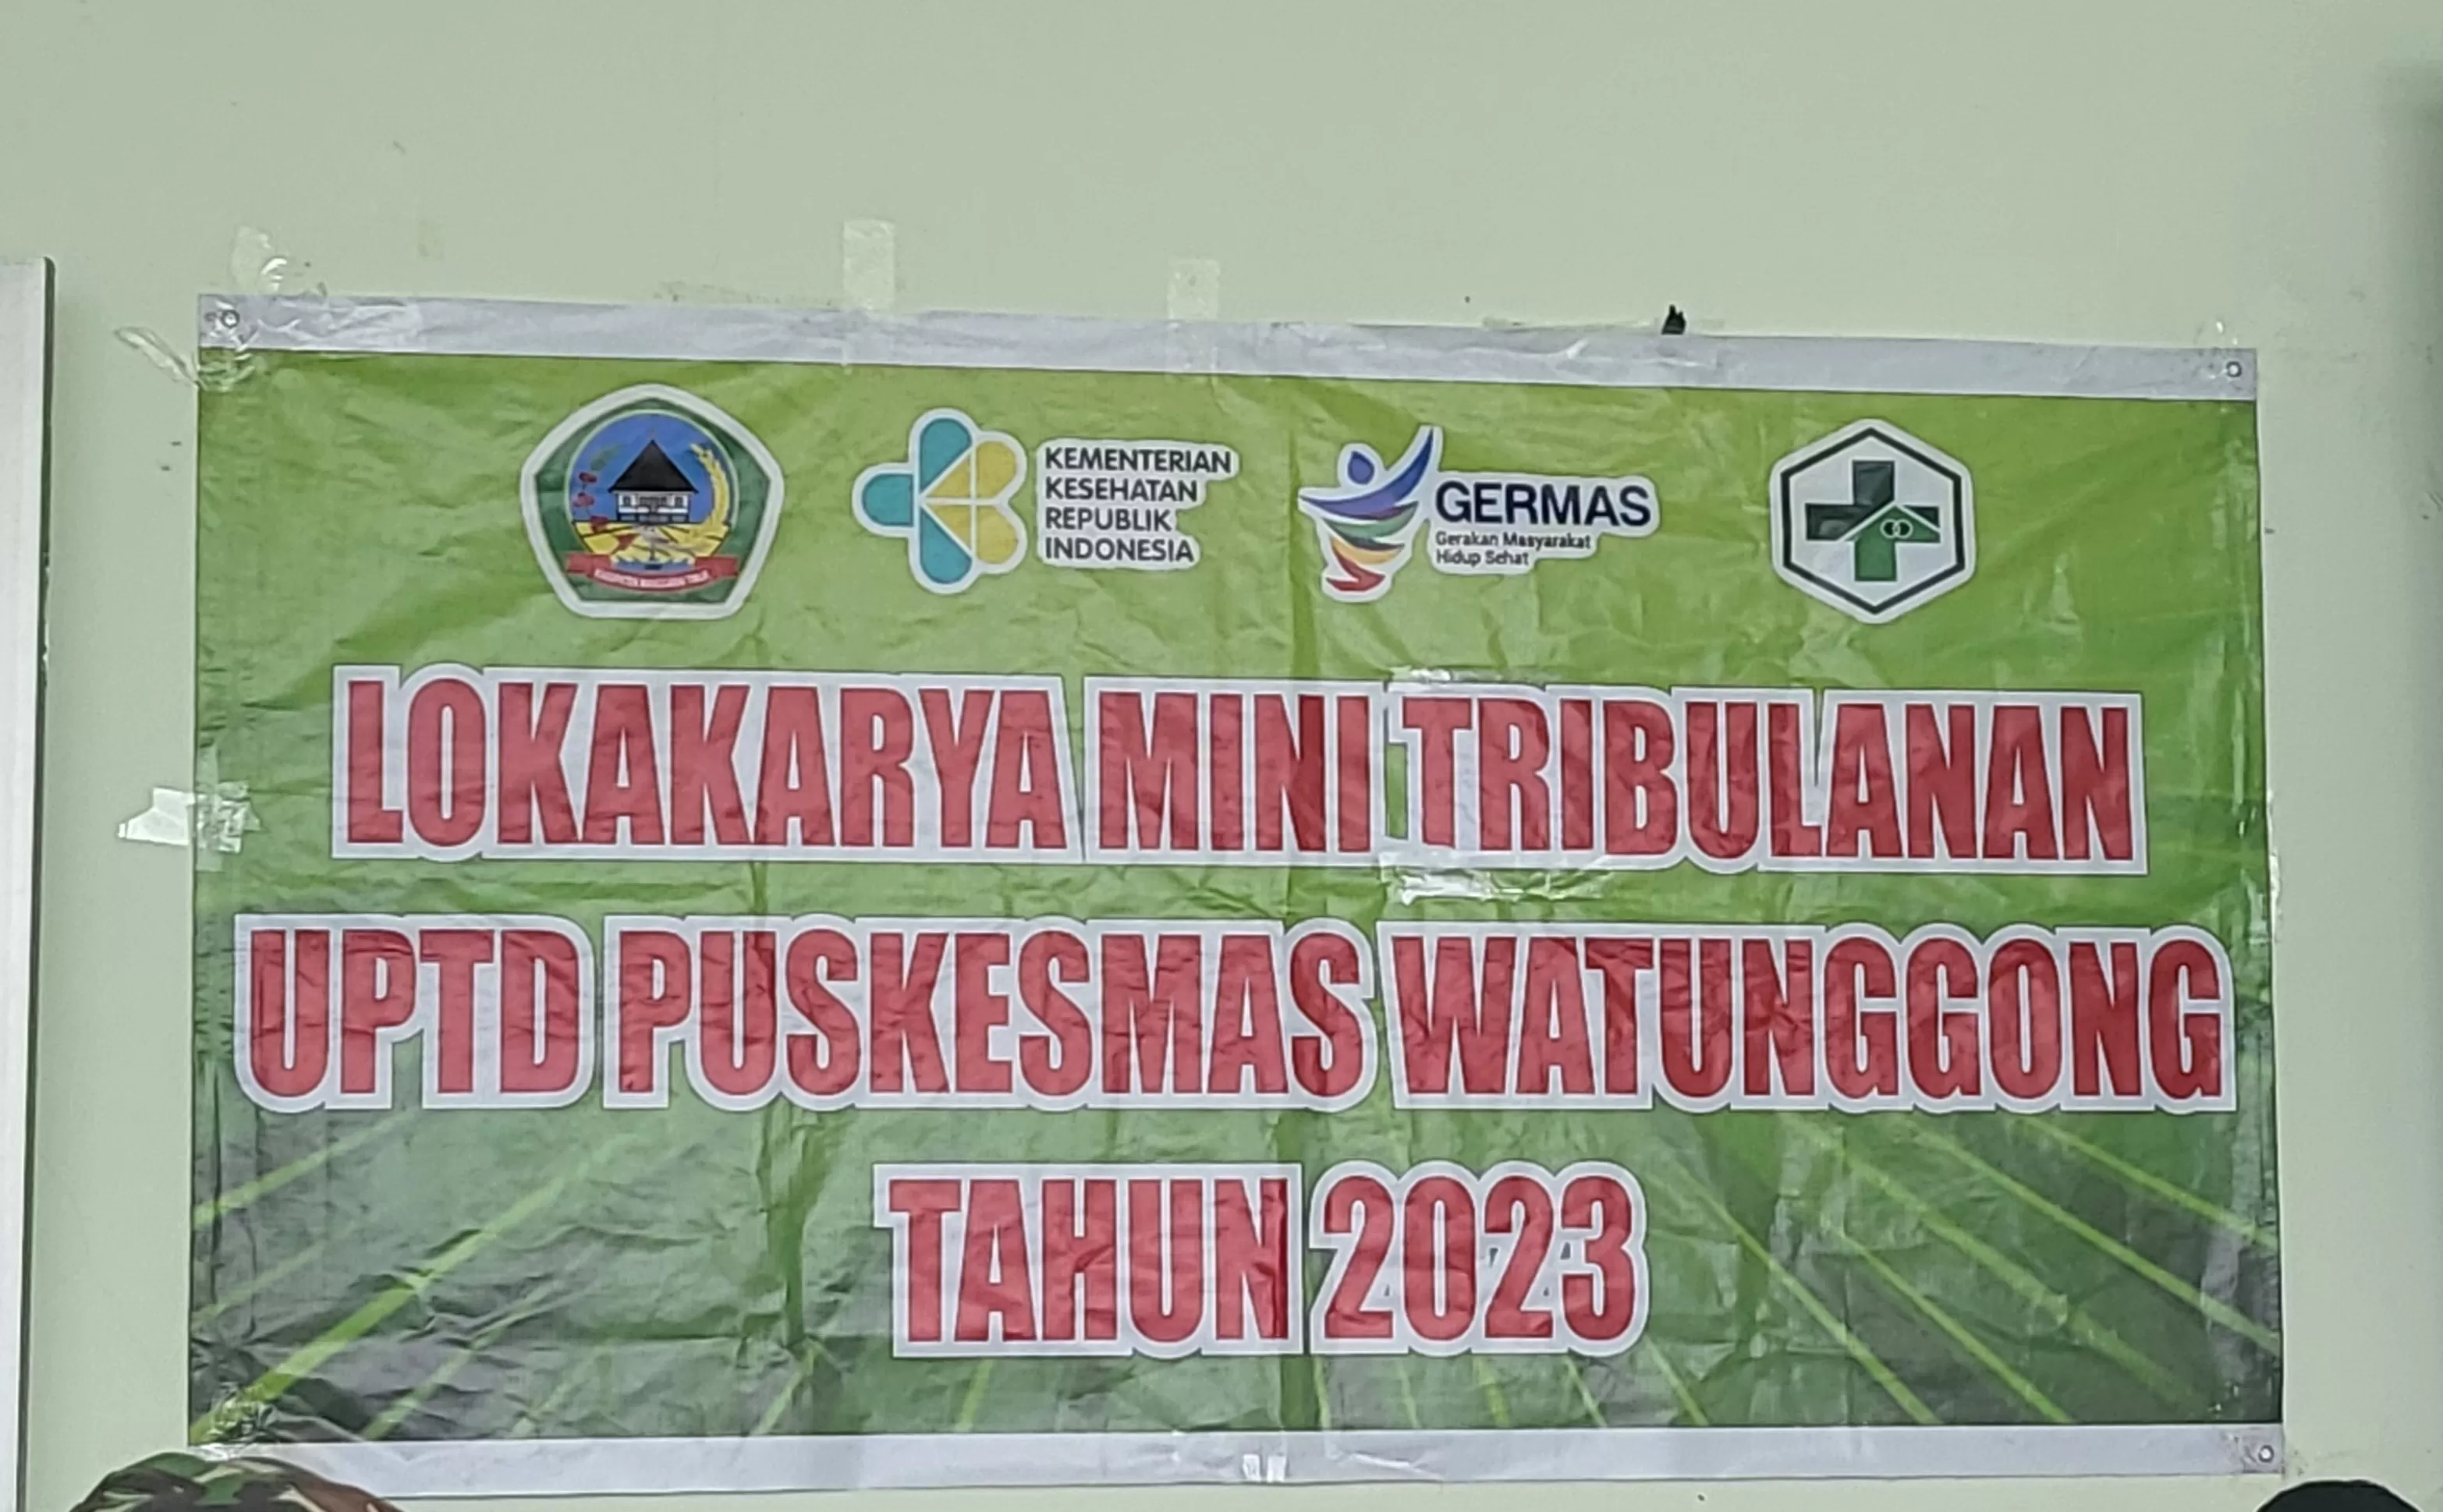 Lokakarya Mini Tribulanan Puskesmas Afirmasi Watunggong dan Evaluasi Kerja